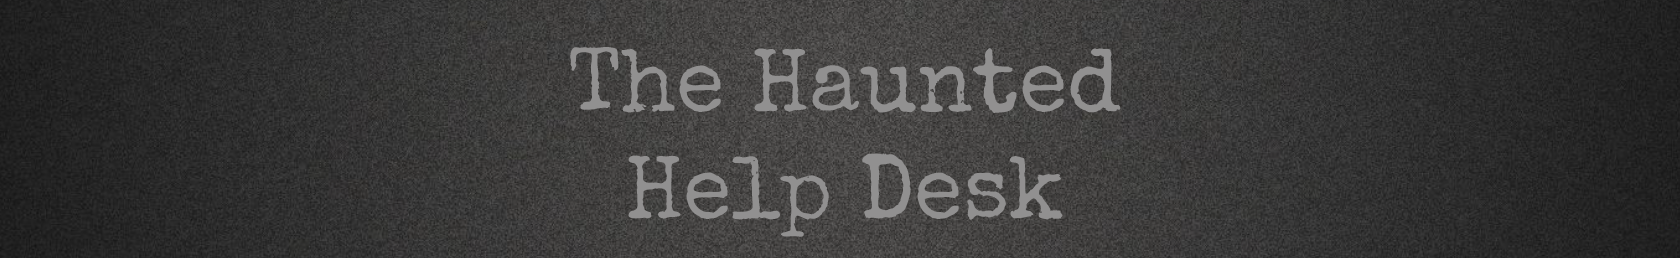 The Haunted Help Desk